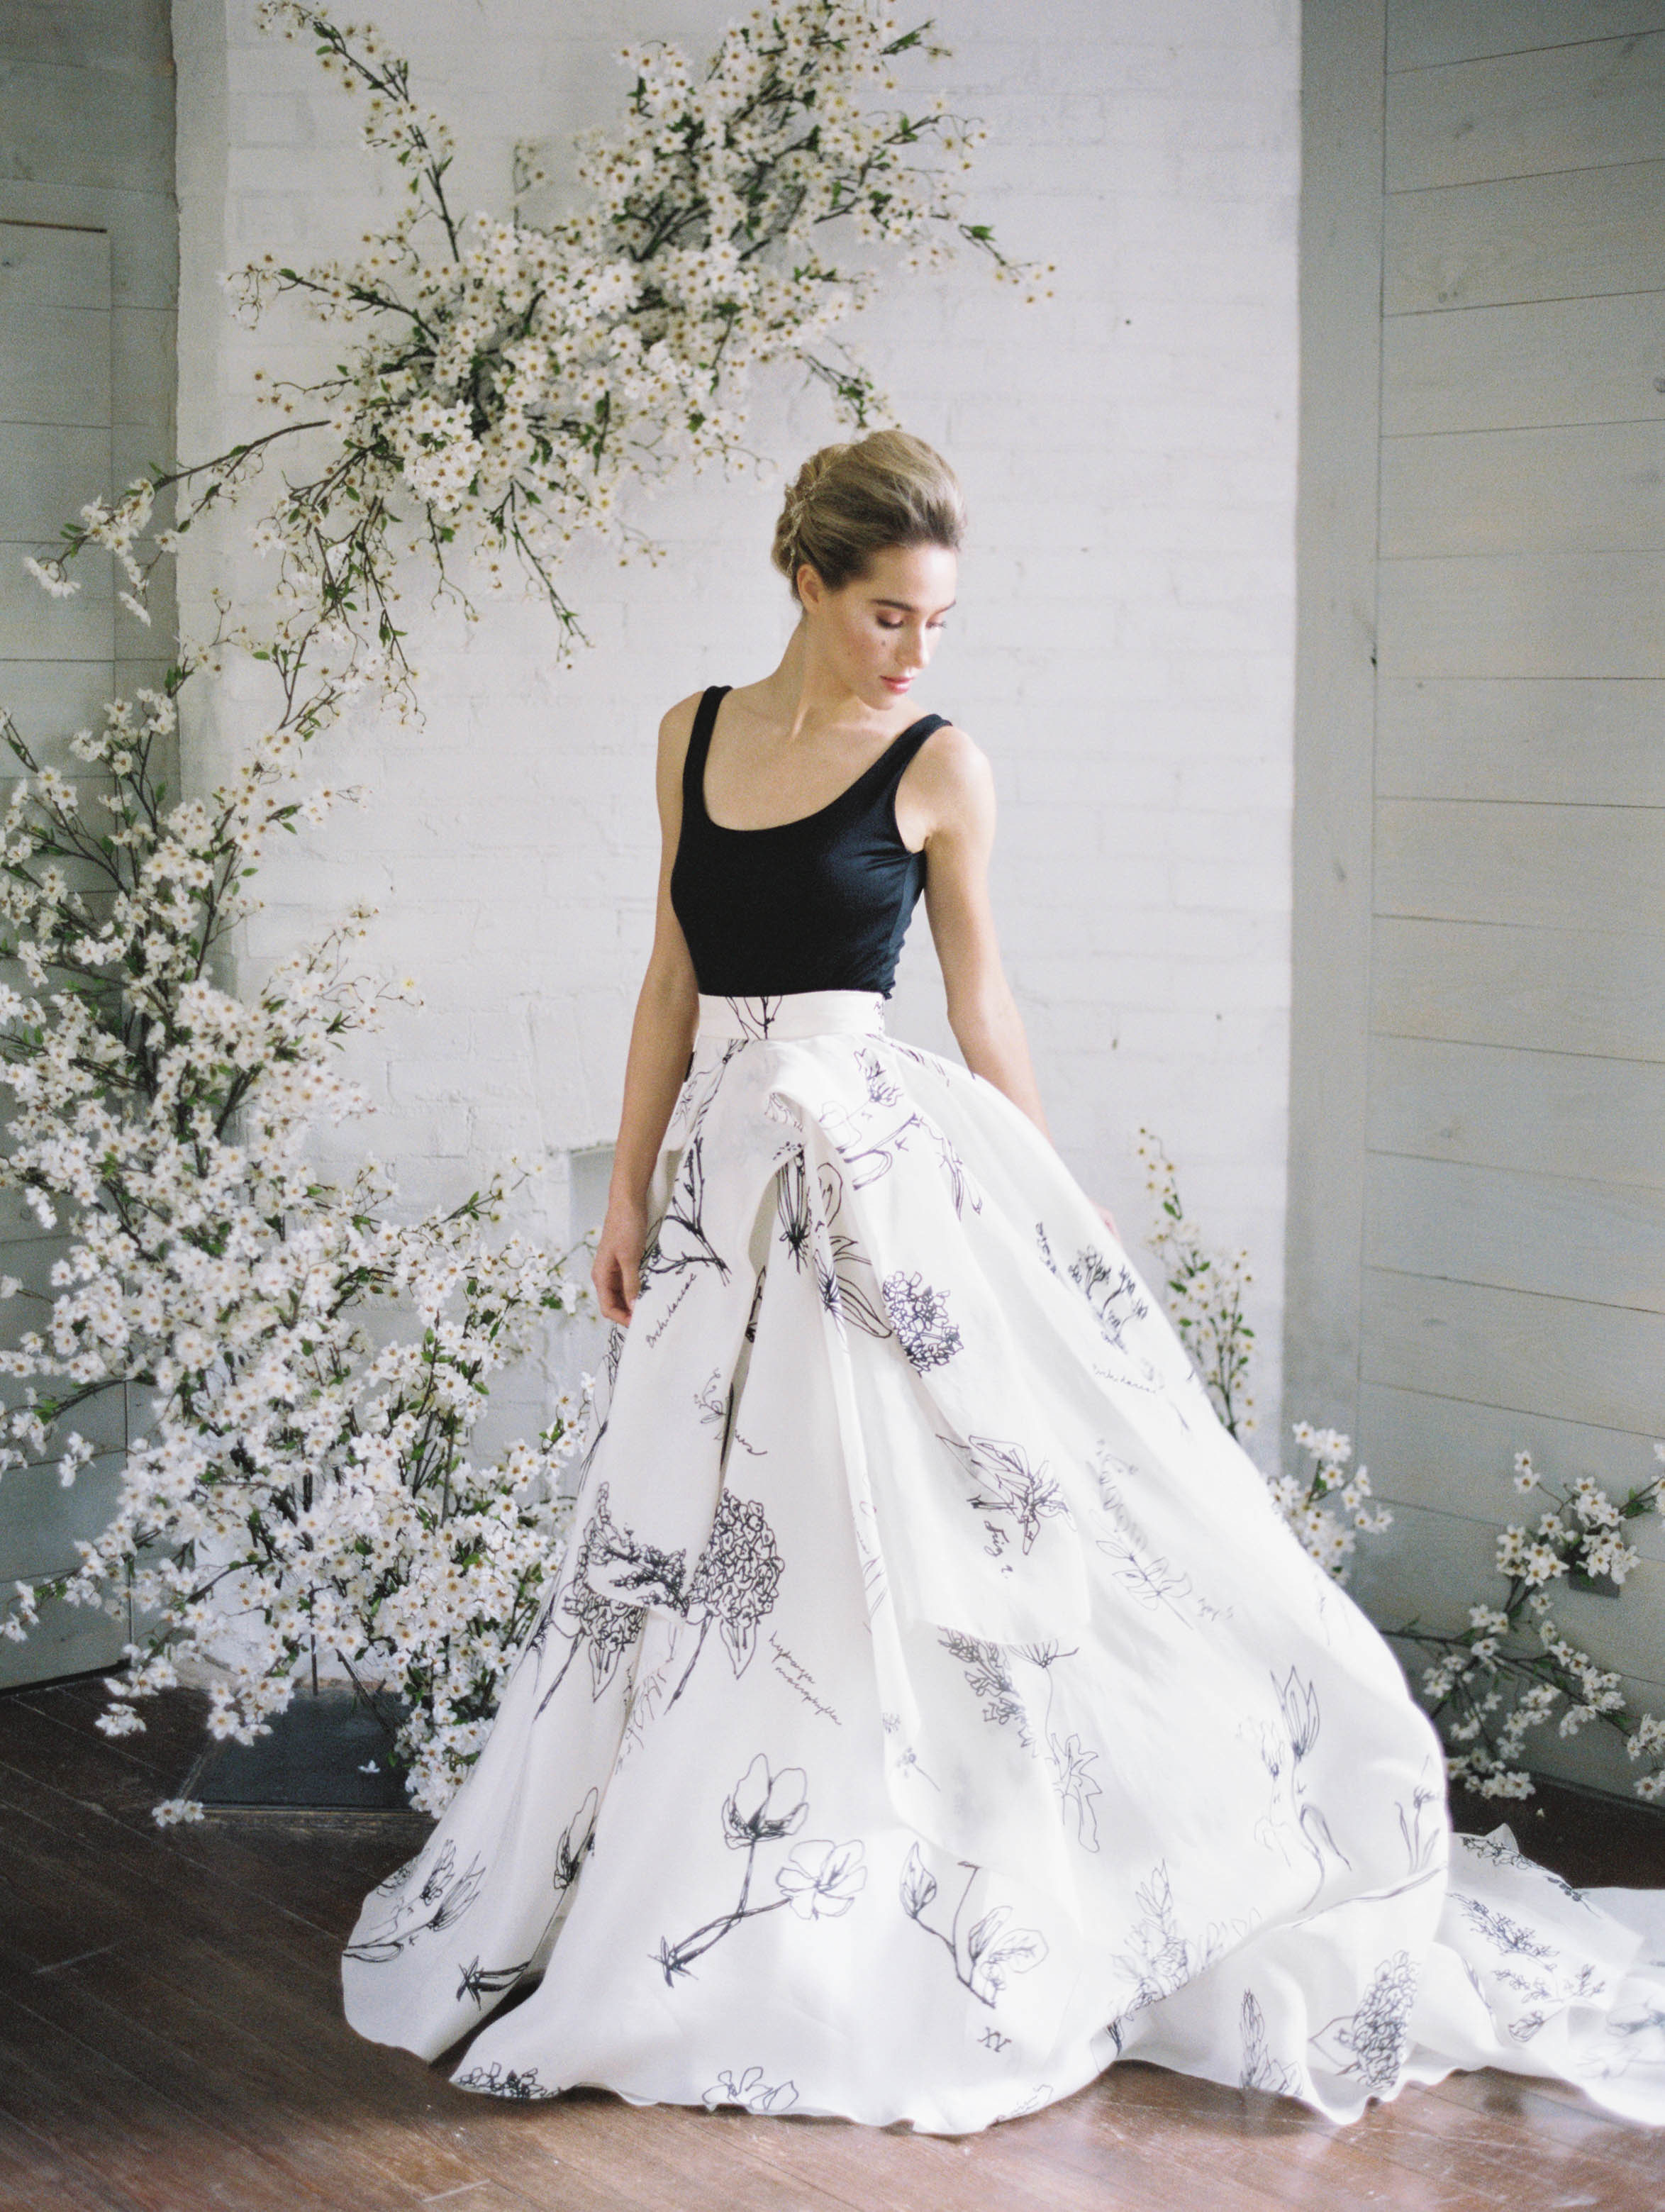 Printed floral wedding skirt black and white bridal separates nyc designer12.jpg